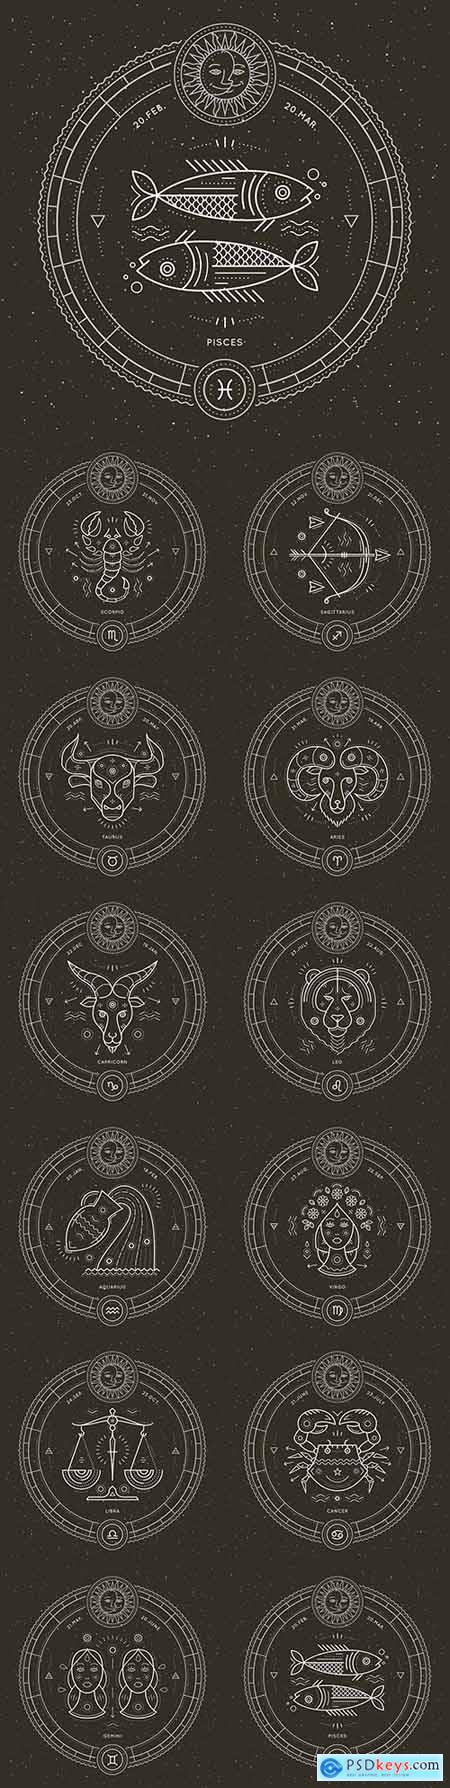 Zodiac sign retro astrological symbol and emblem illustration